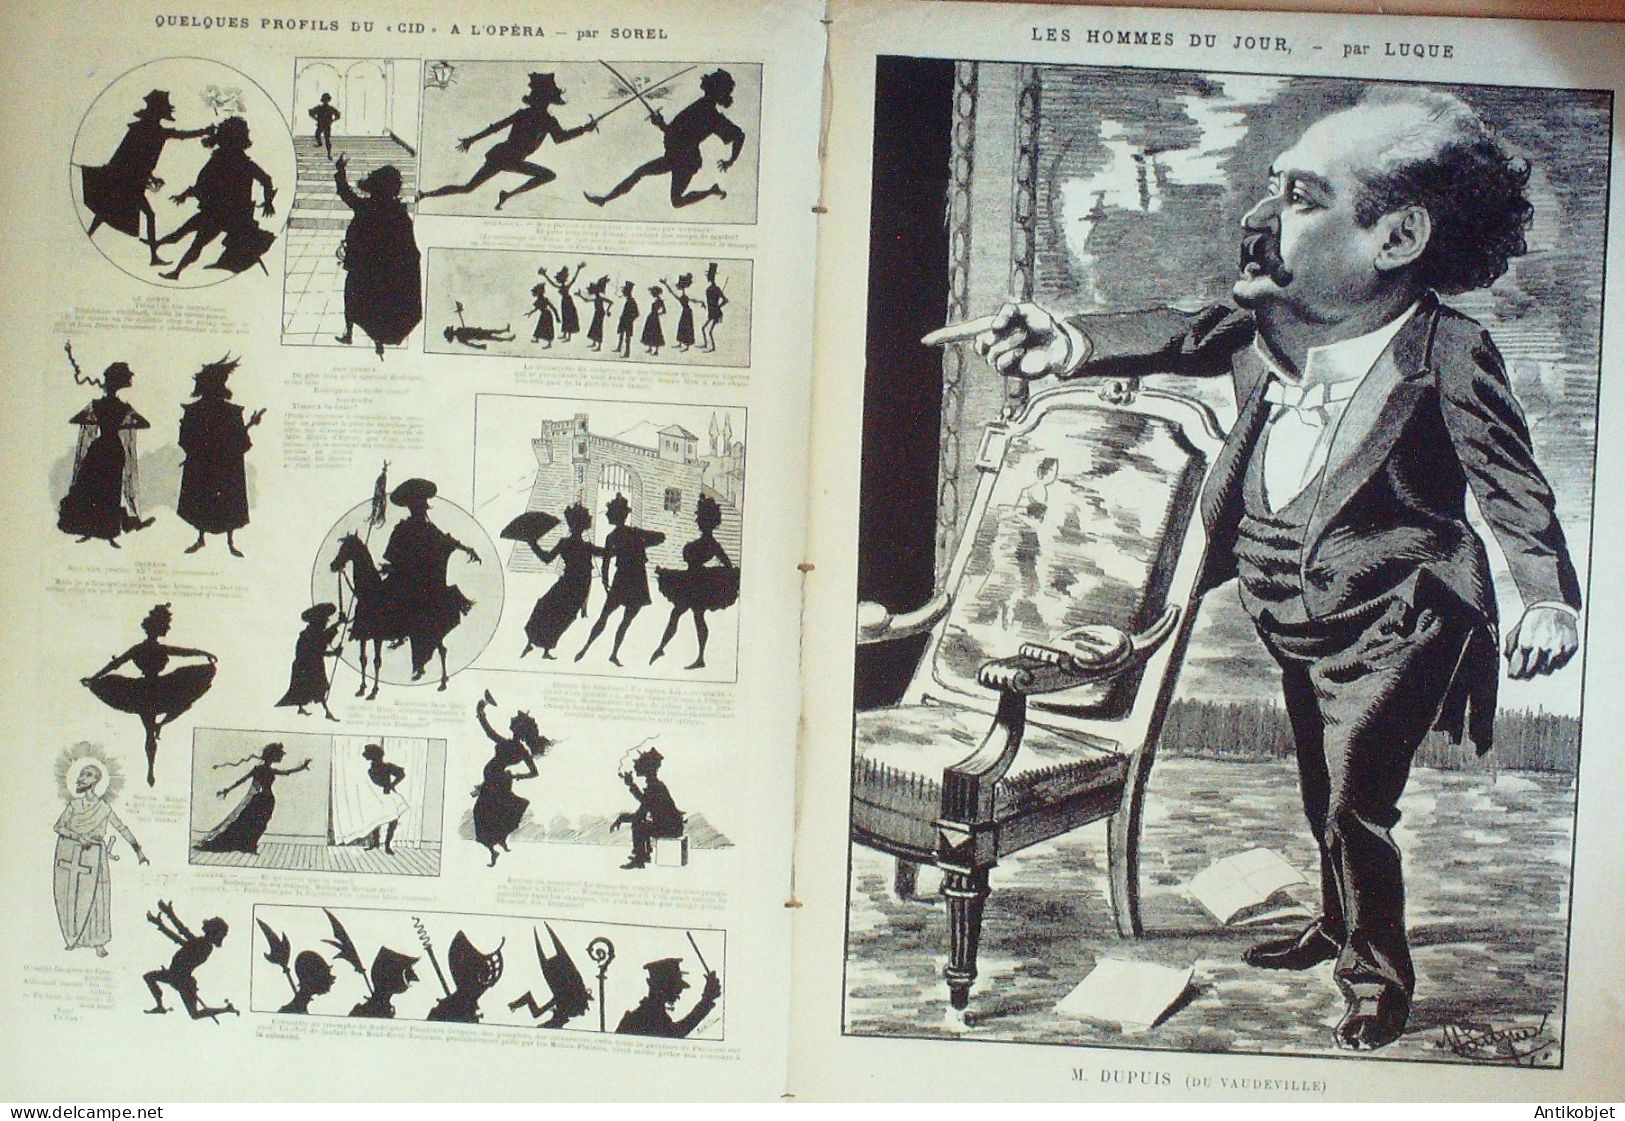 La Caricature 1886 N°318 En Mer Tiret-Bognet Octave Uzanne Dupuis Par Luque Sorel Robida - Revistas - Antes 1900